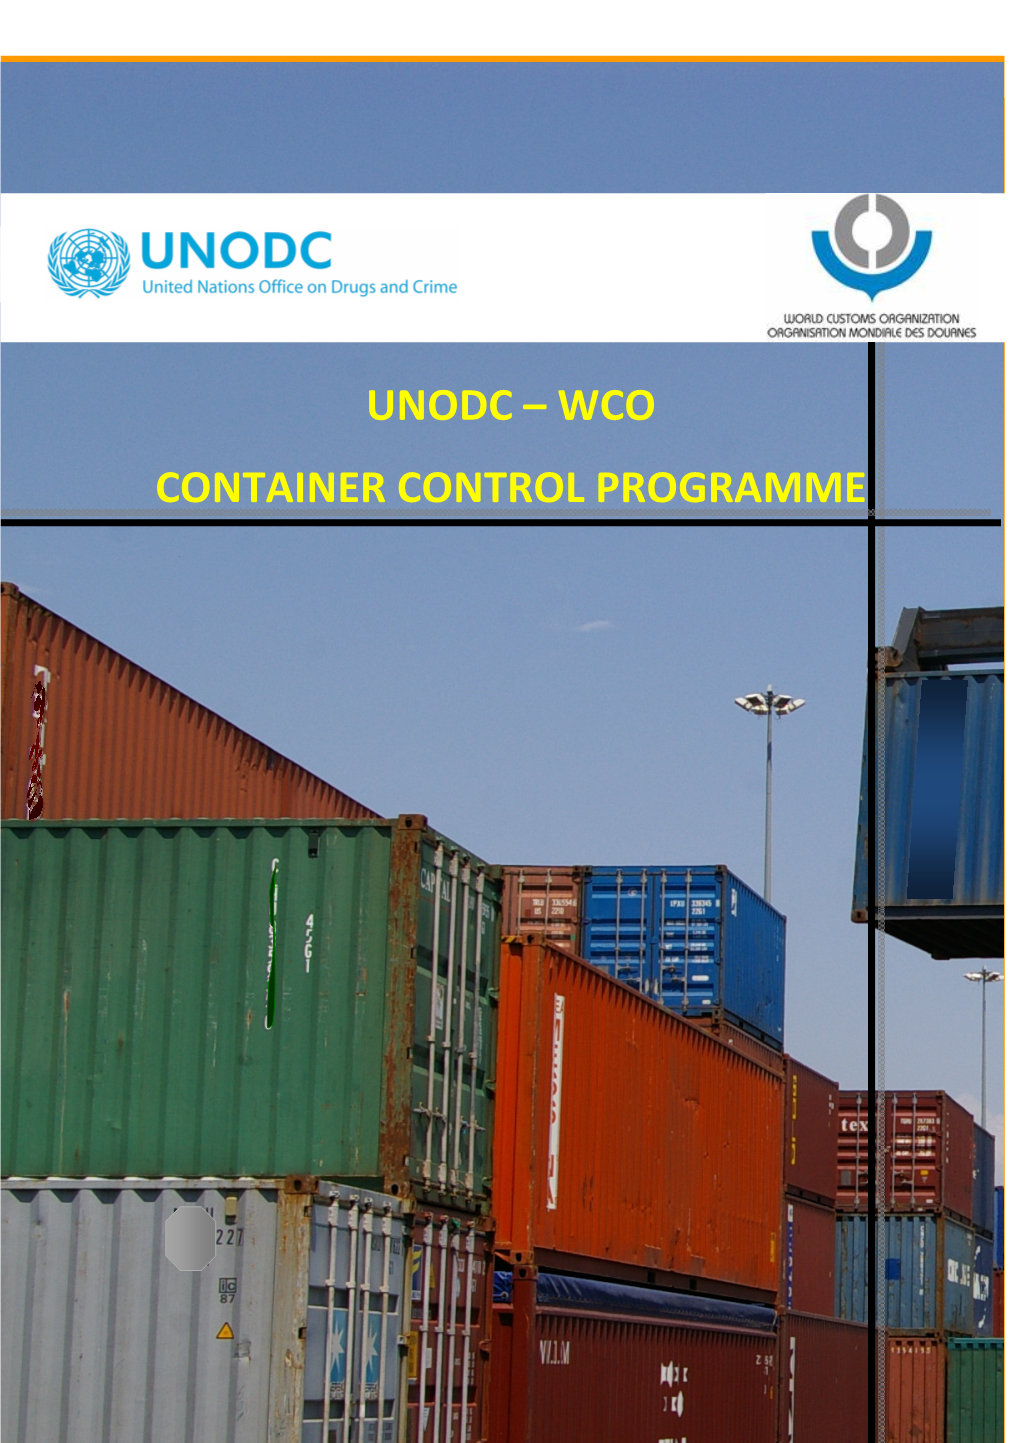 Unodc – Wco Container Control Programme